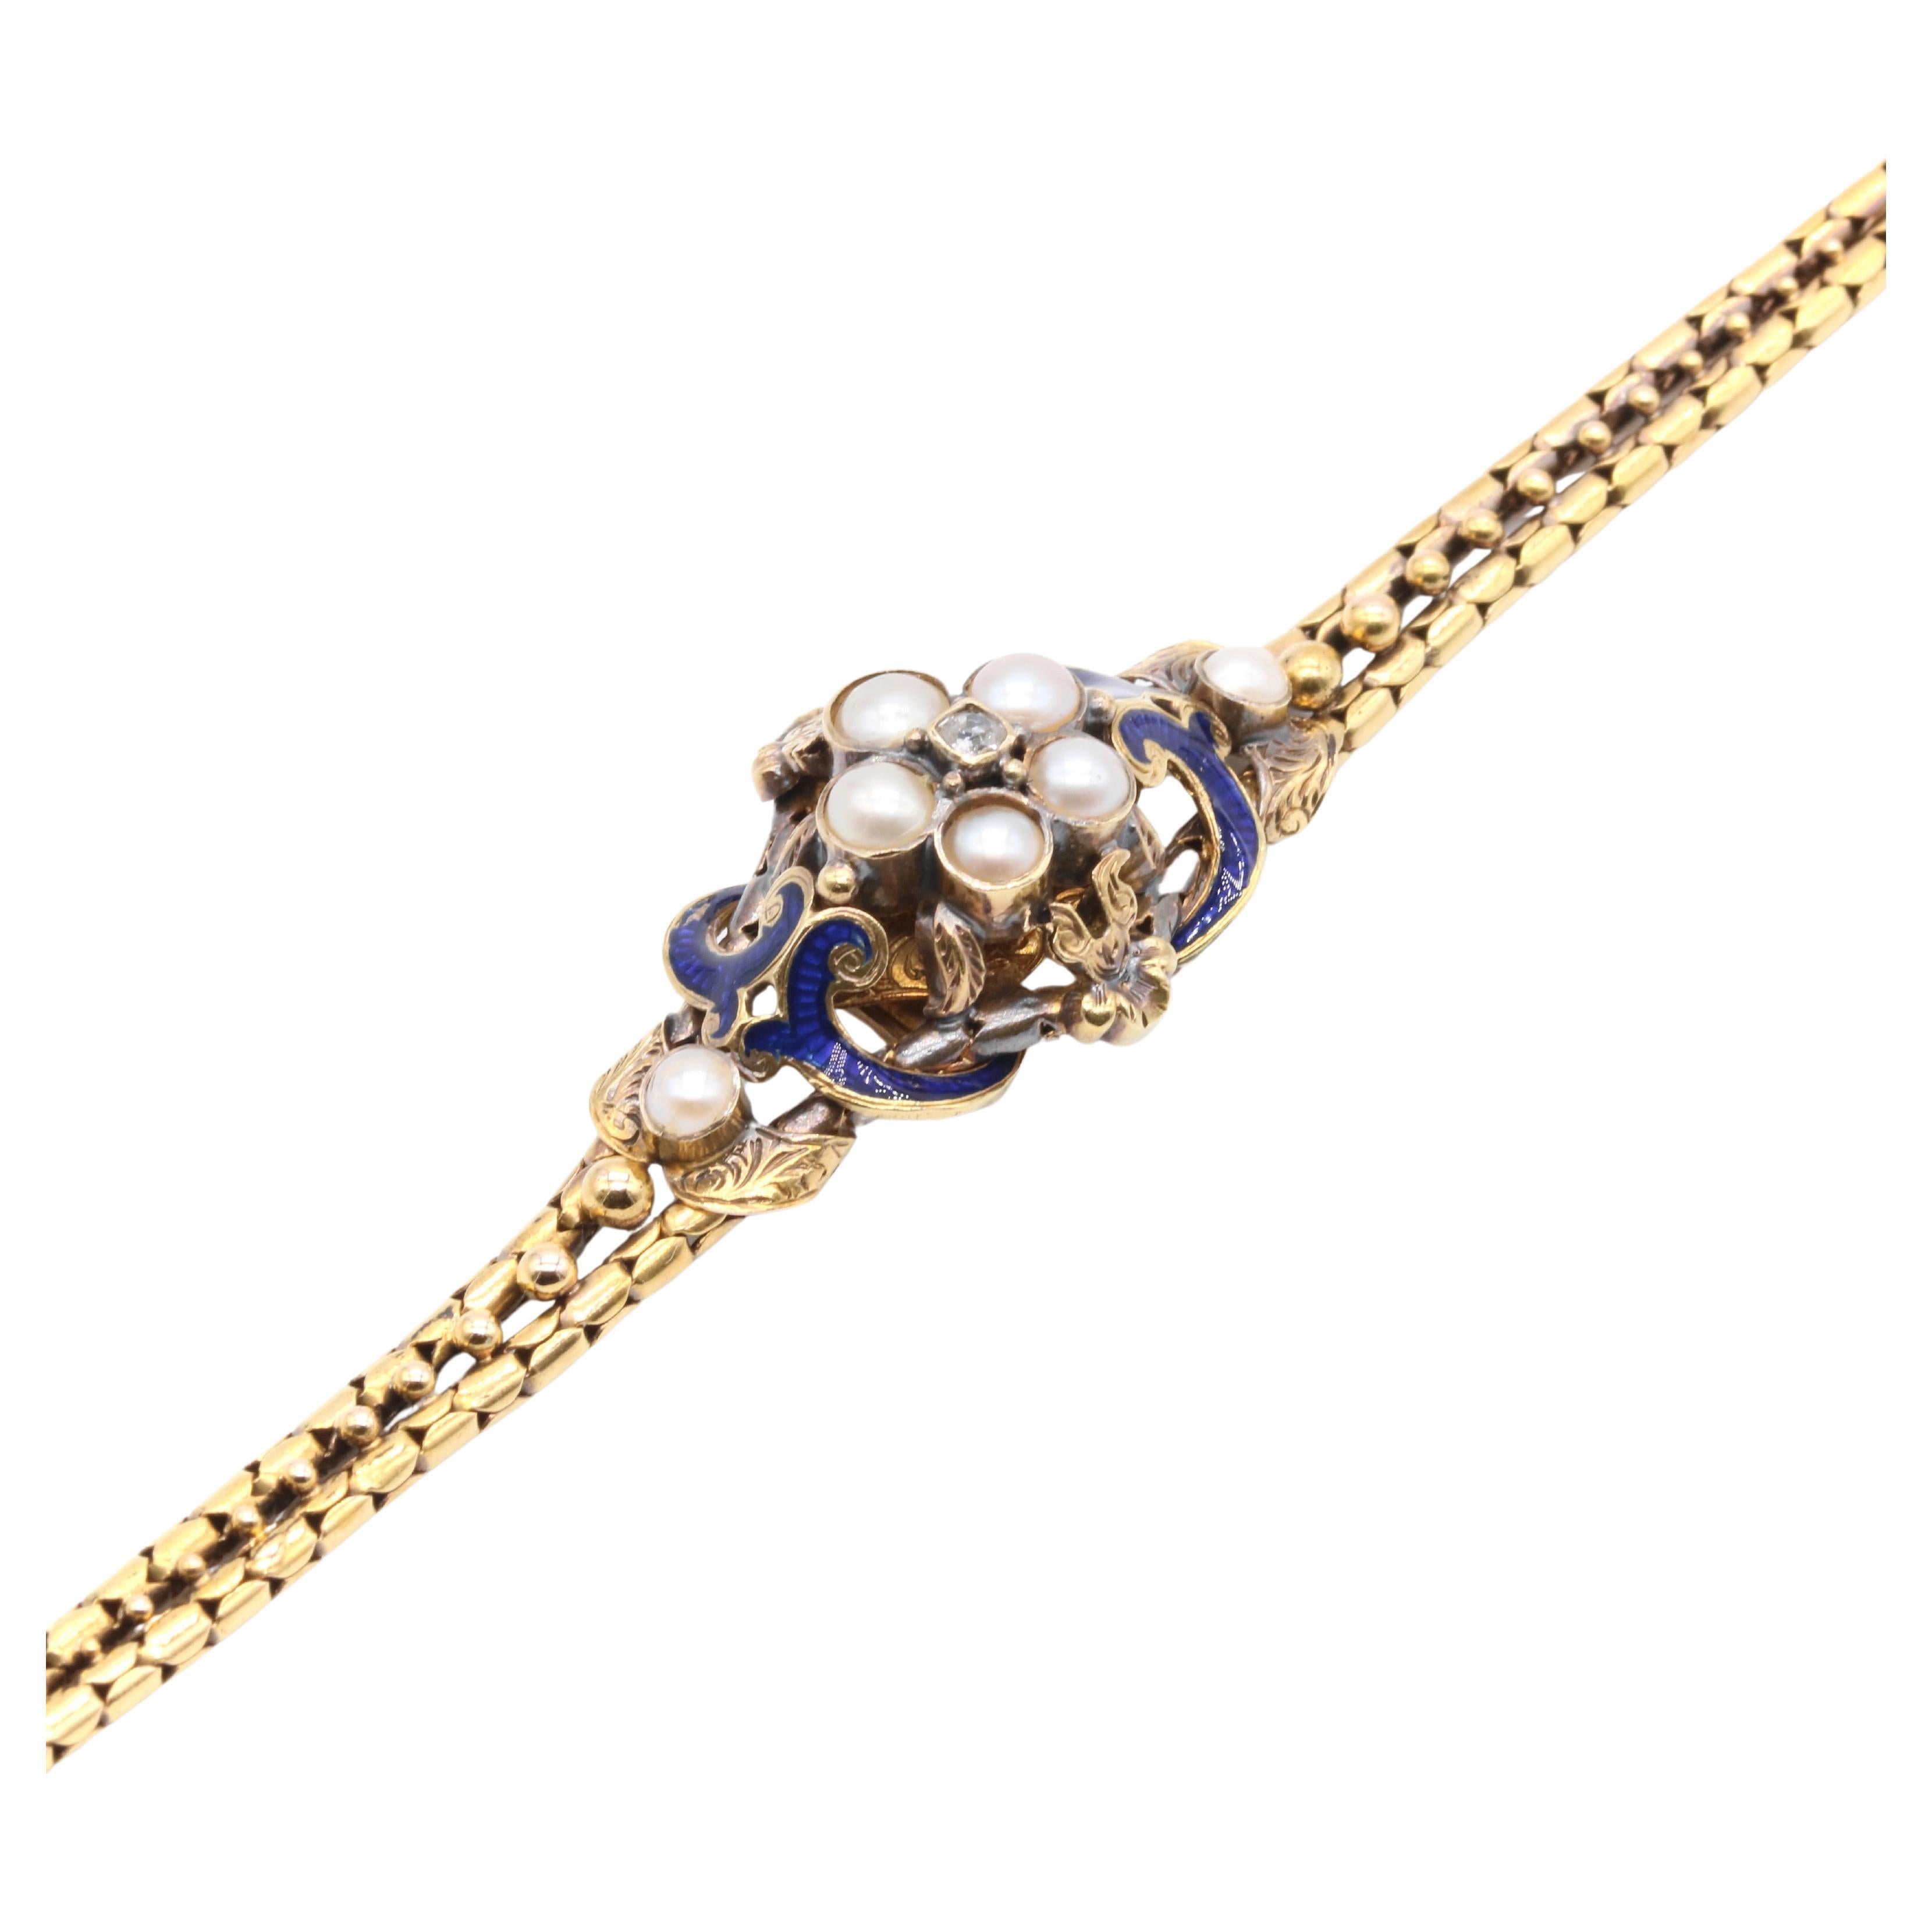 Antique Victorian 18K Gold Diamond, Pearl & Blue Enamel Engraved Bracelet